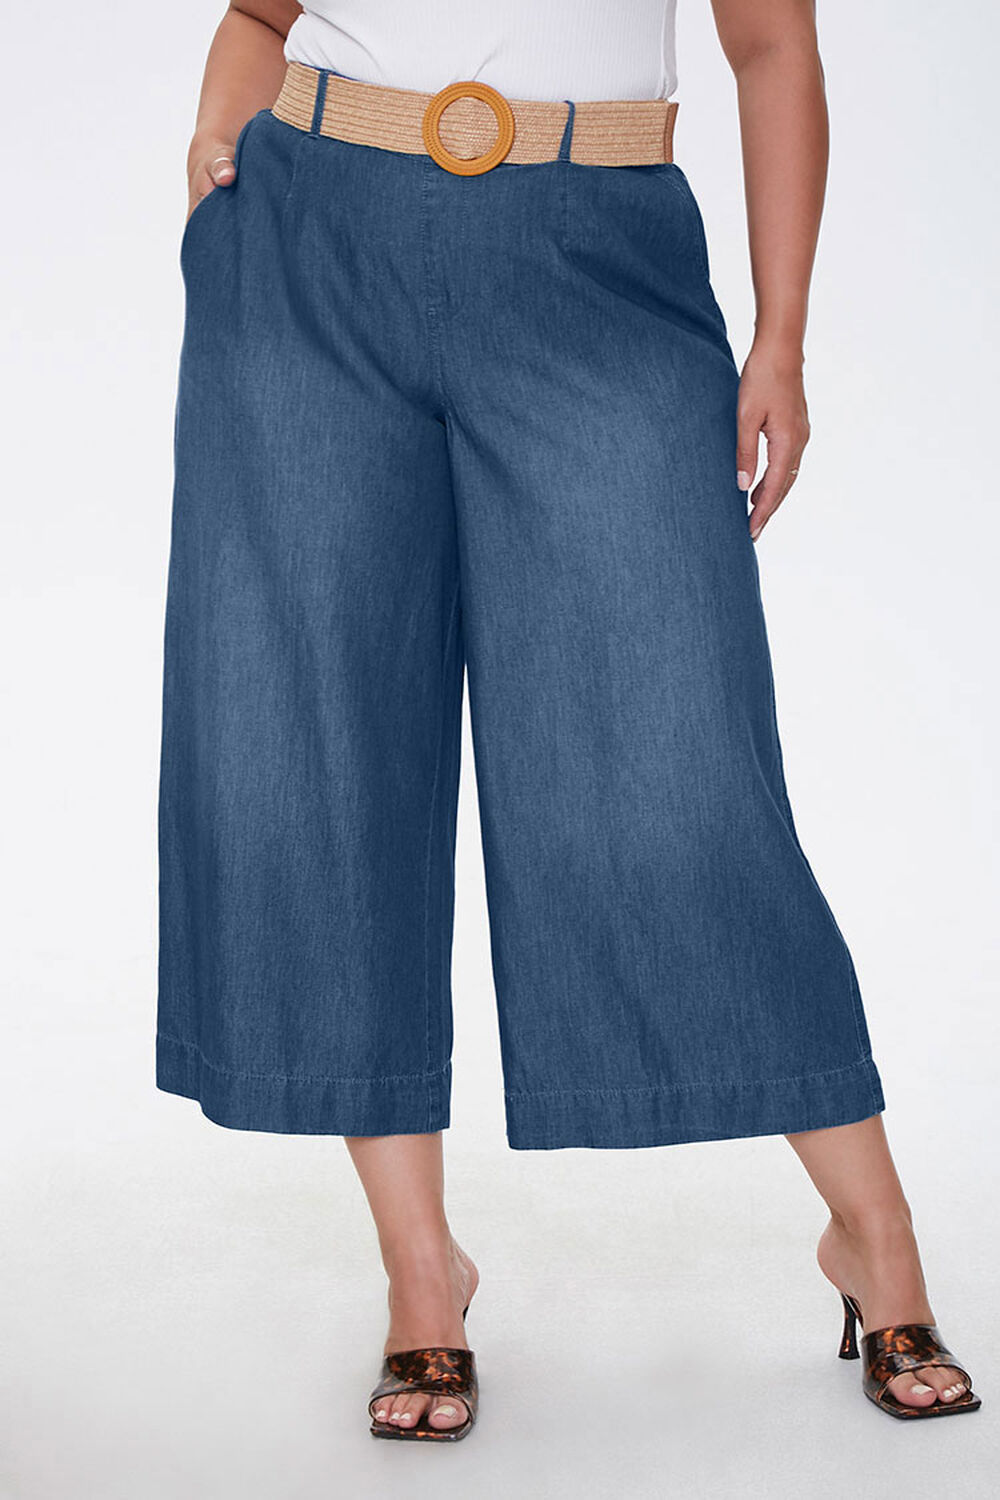 MEDIUM DENIM Plus Size Cropped Wide-Leg Jeans, image 2